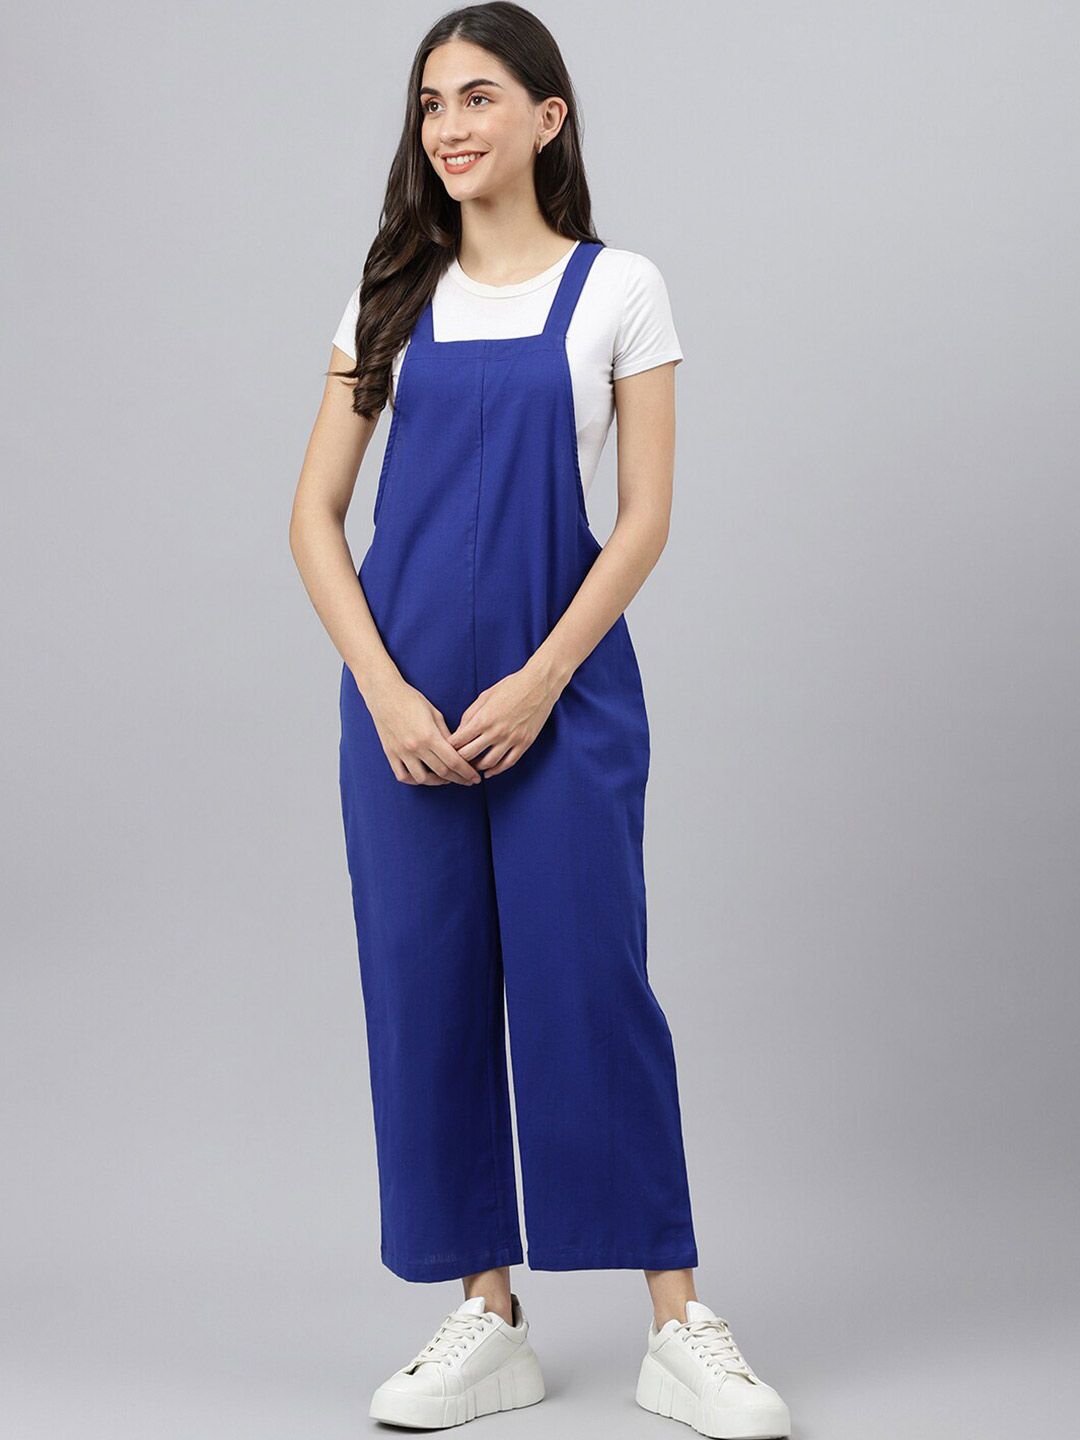 DEEBACO Blue Culotte Jumpsuit Price in India